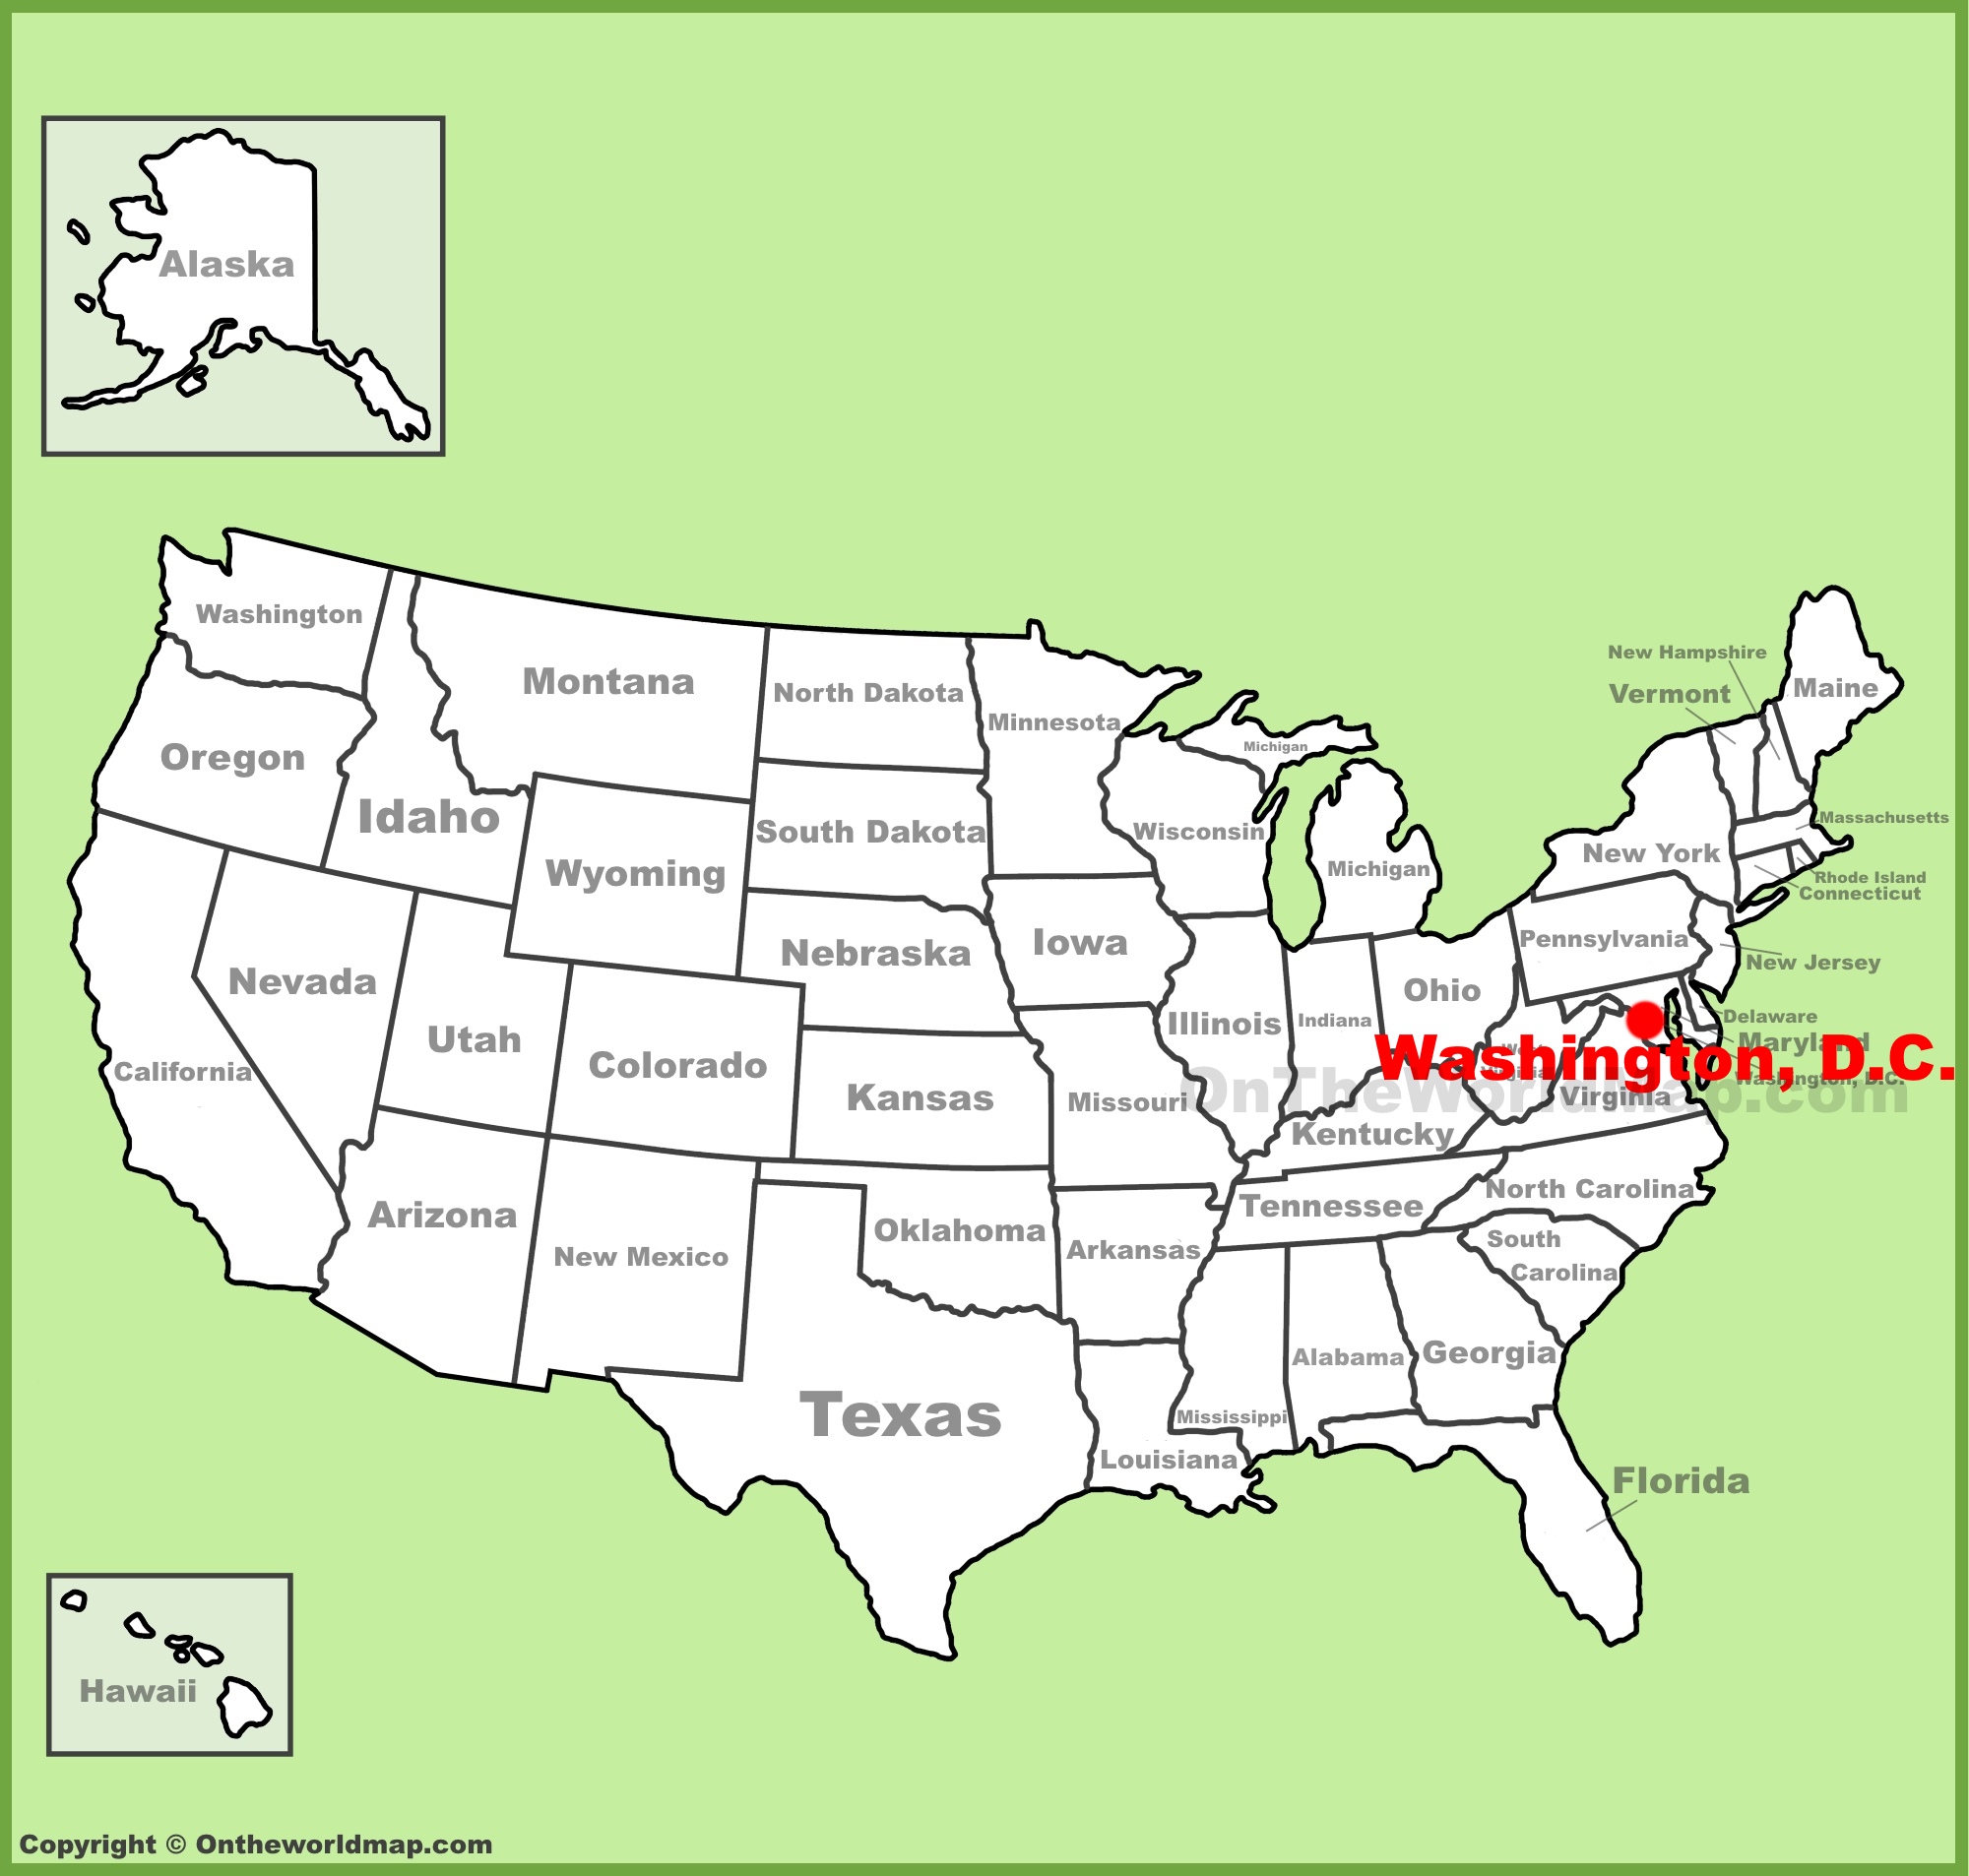 Washington, D.C. location on the U.S. Map